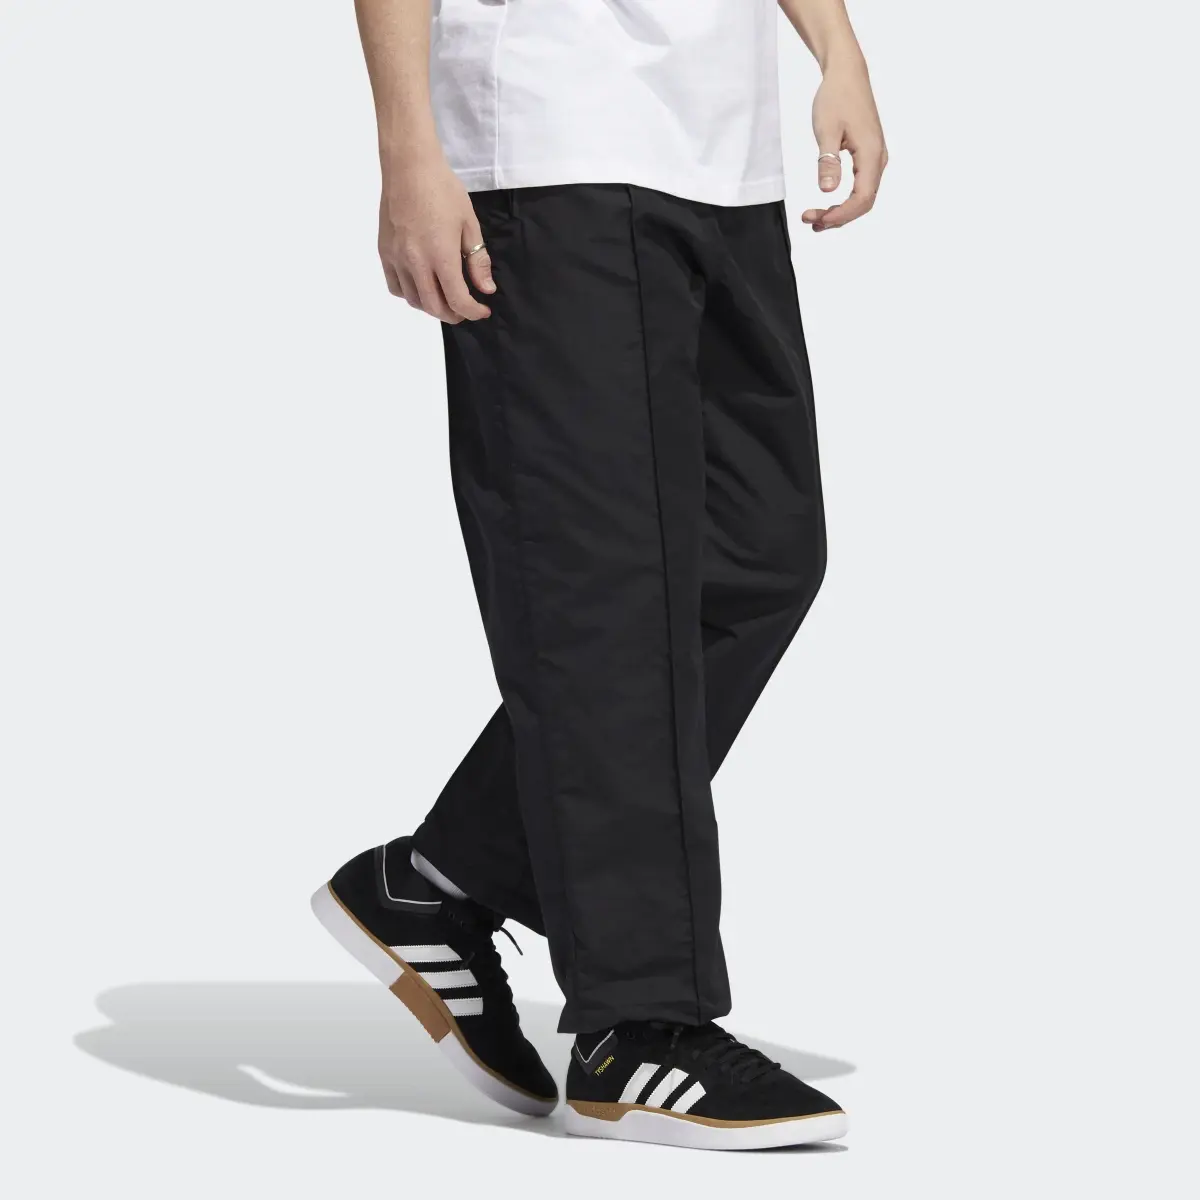 Adidas Pintuck Pants (Gender Neutral). 3